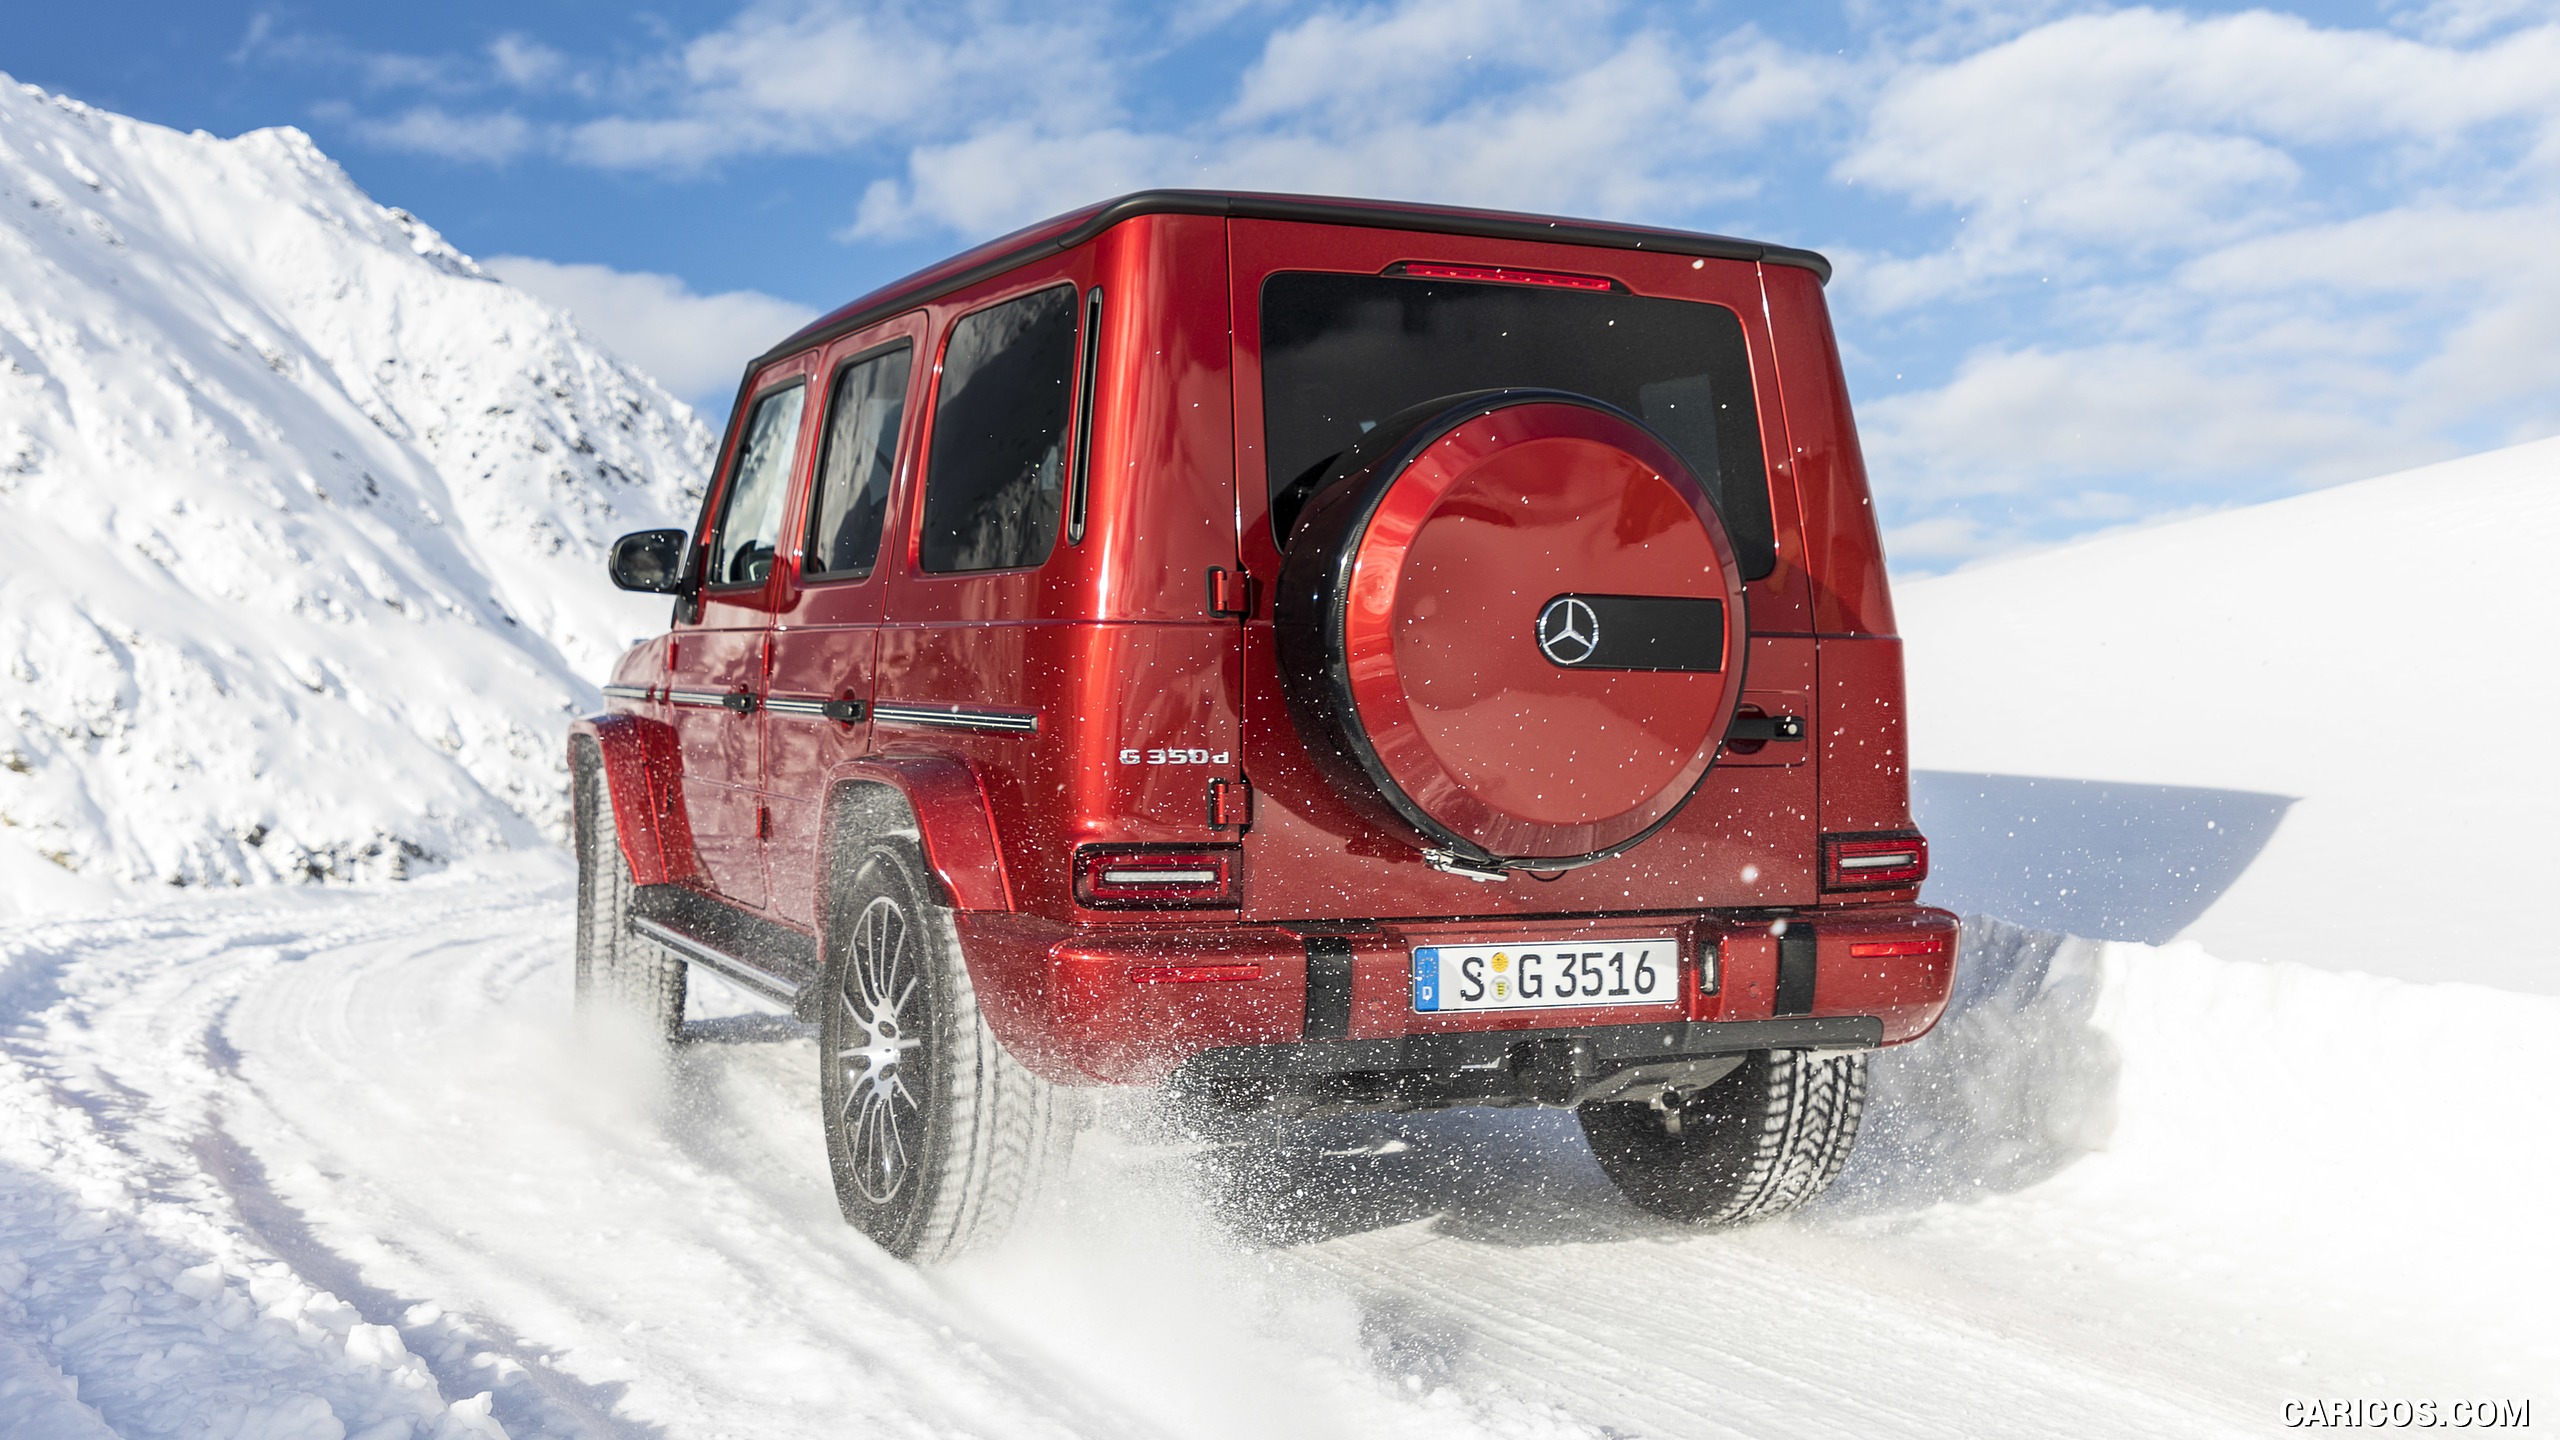 2019 Mercedes-Benz G 350 d (Designo Hyazinth Red Metallic) - In Snow - Rear, #2 of 51